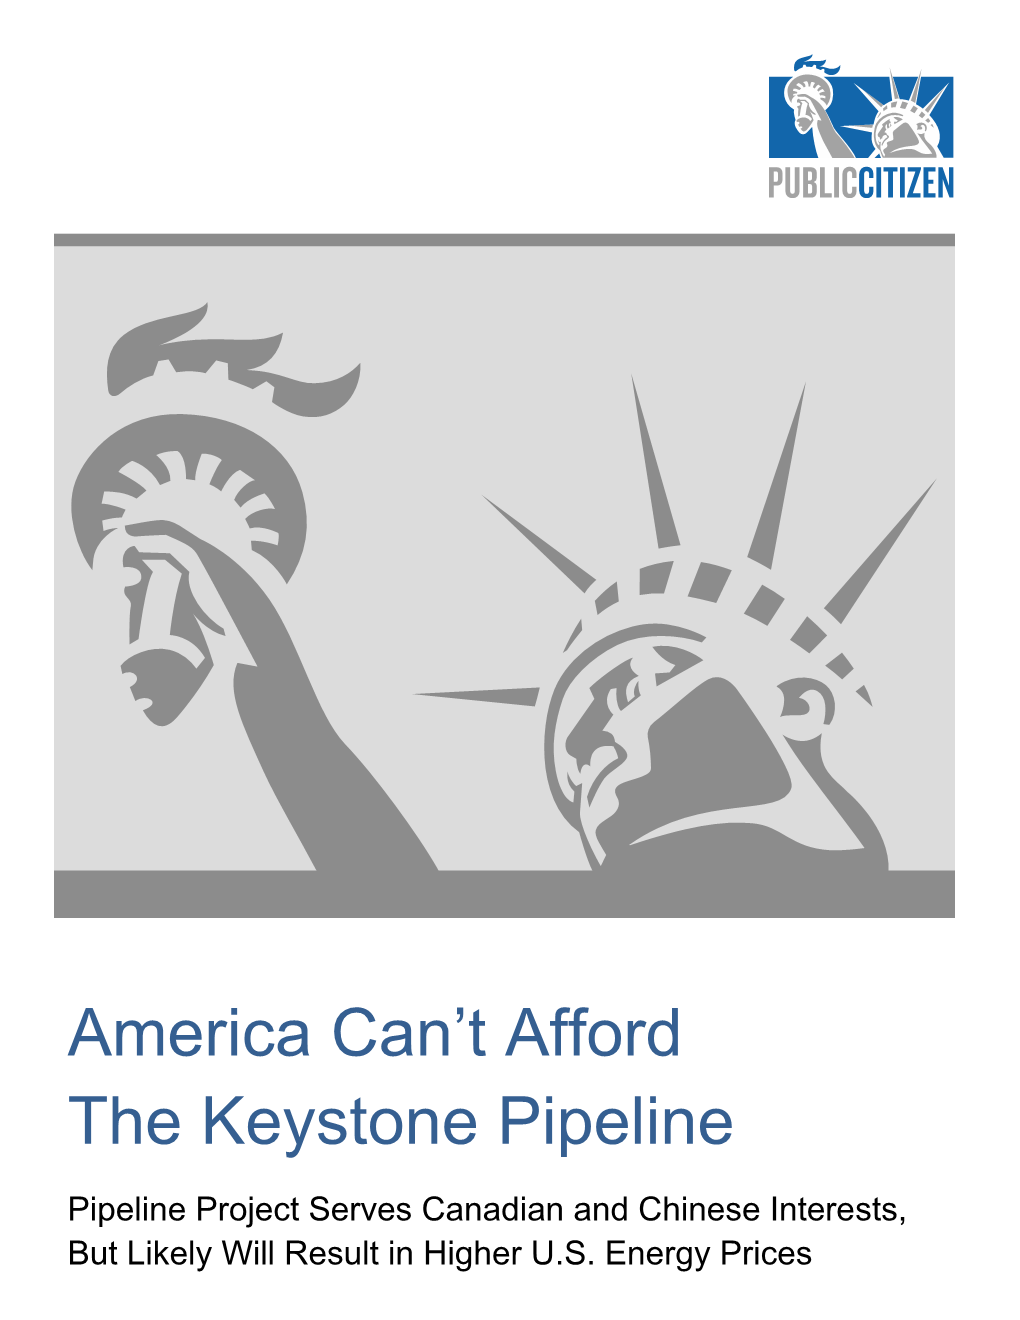 America Can't Afford the Keystone Pipeline